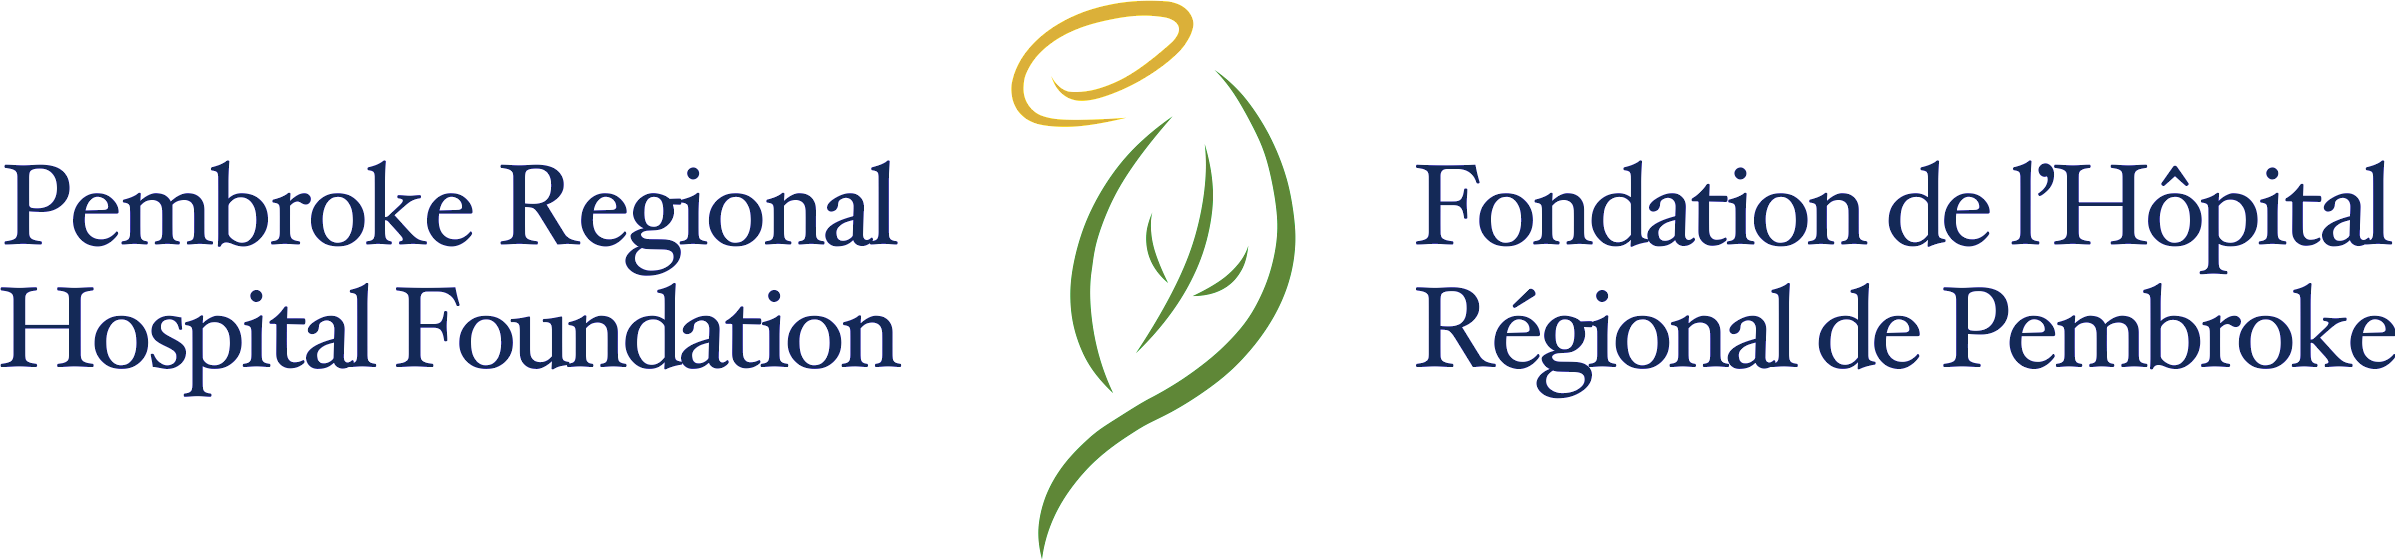 Pembroke Regional Hospital Foundation logo